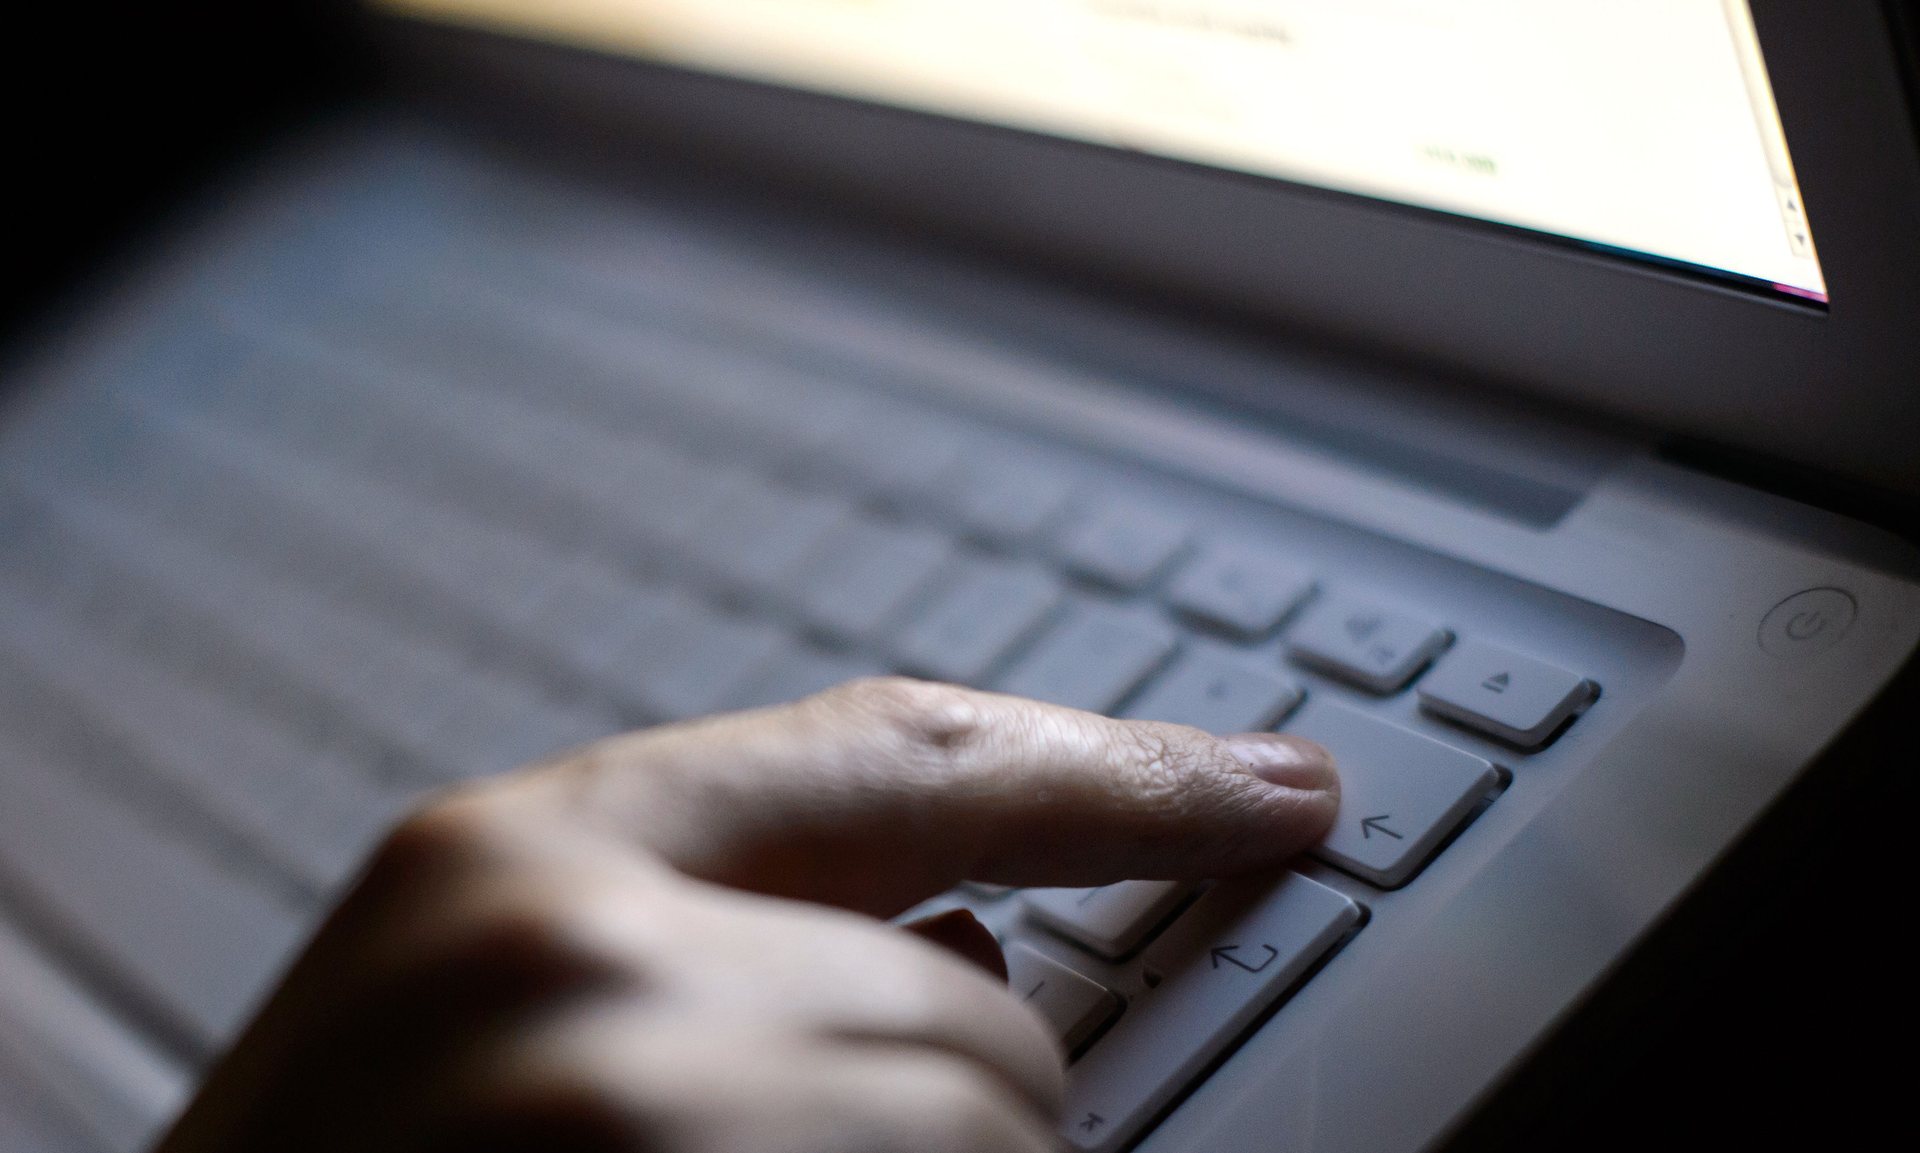 KYΠΡΟΣ - ΠΡΟΣΟΧΗ: Νέα διαδικτυακή απάτη - Ζητούν λύτρα